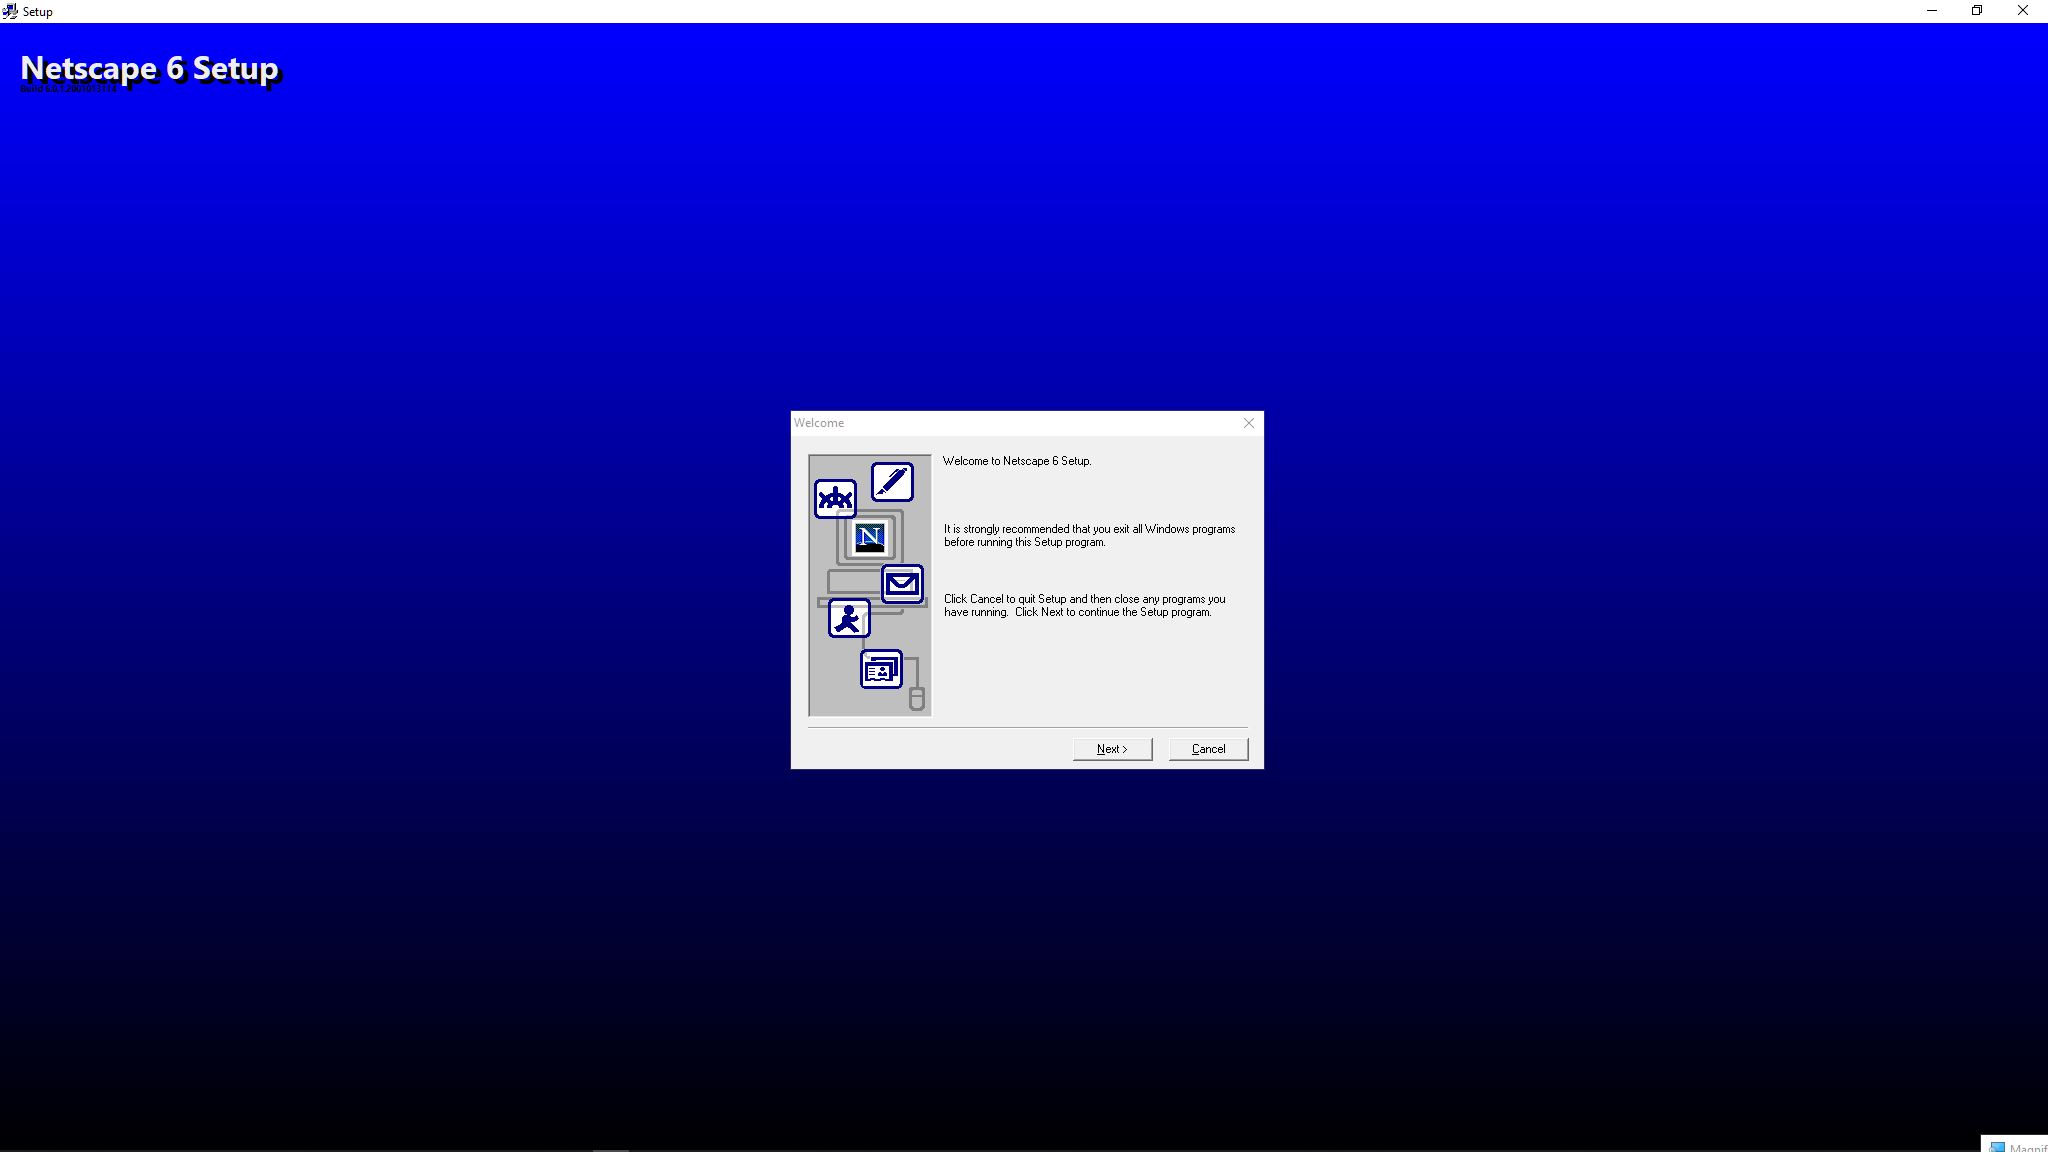 Initial Netscape 6 Setup screen